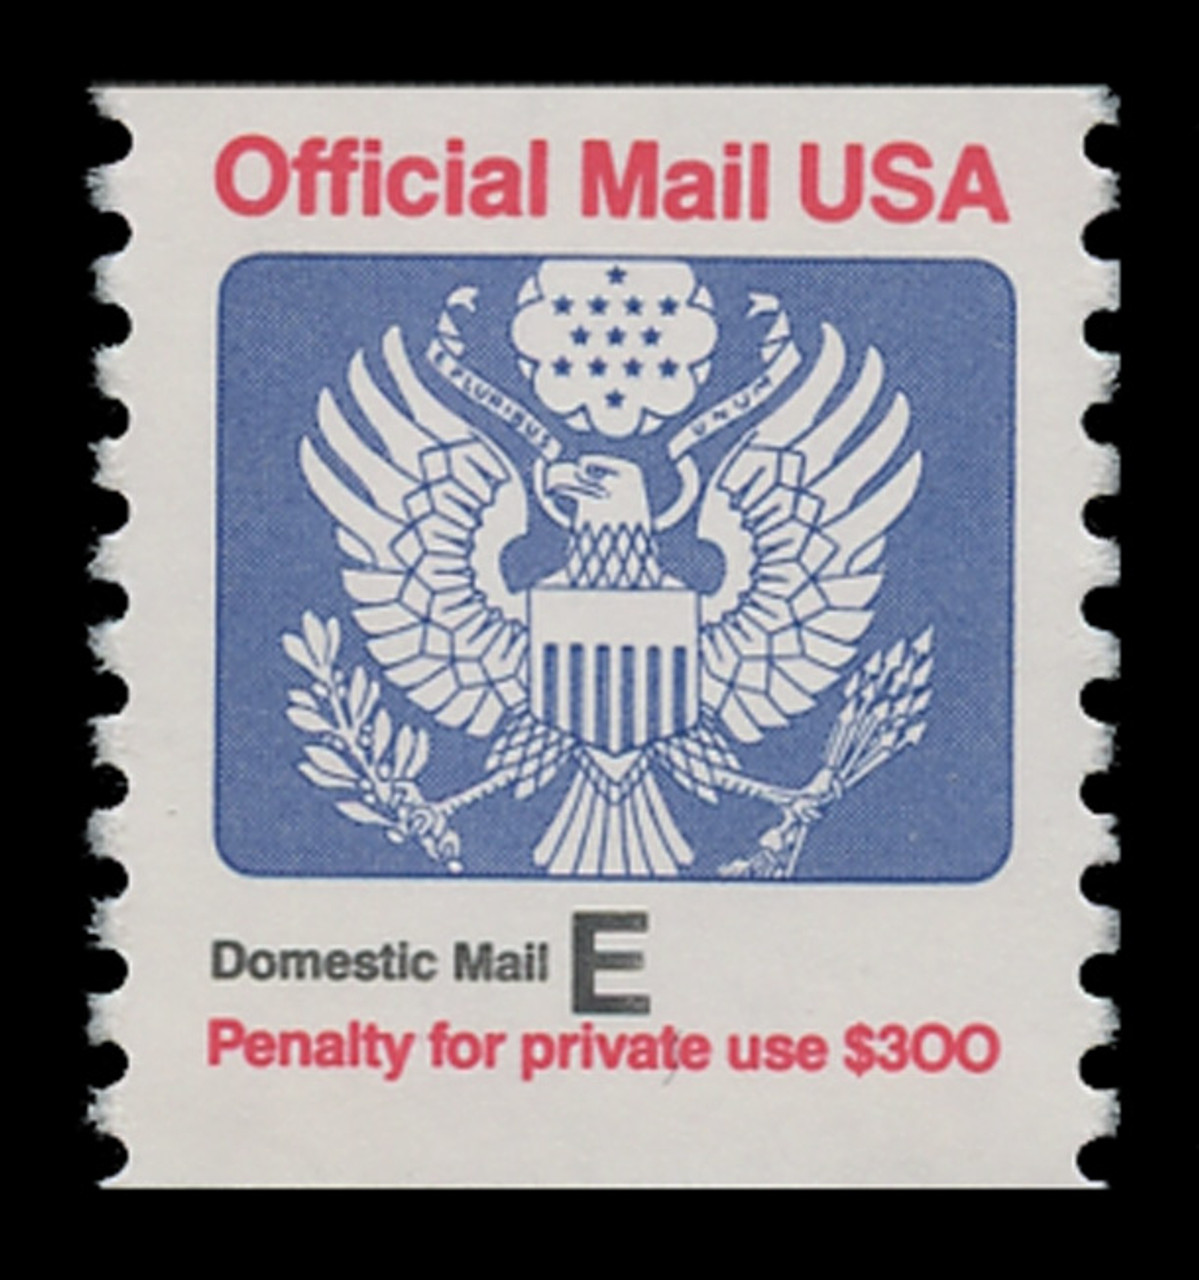 USA Scott # O 140, 1988 (25c) "Domestic Mail E" Official Mail Eagle Coil